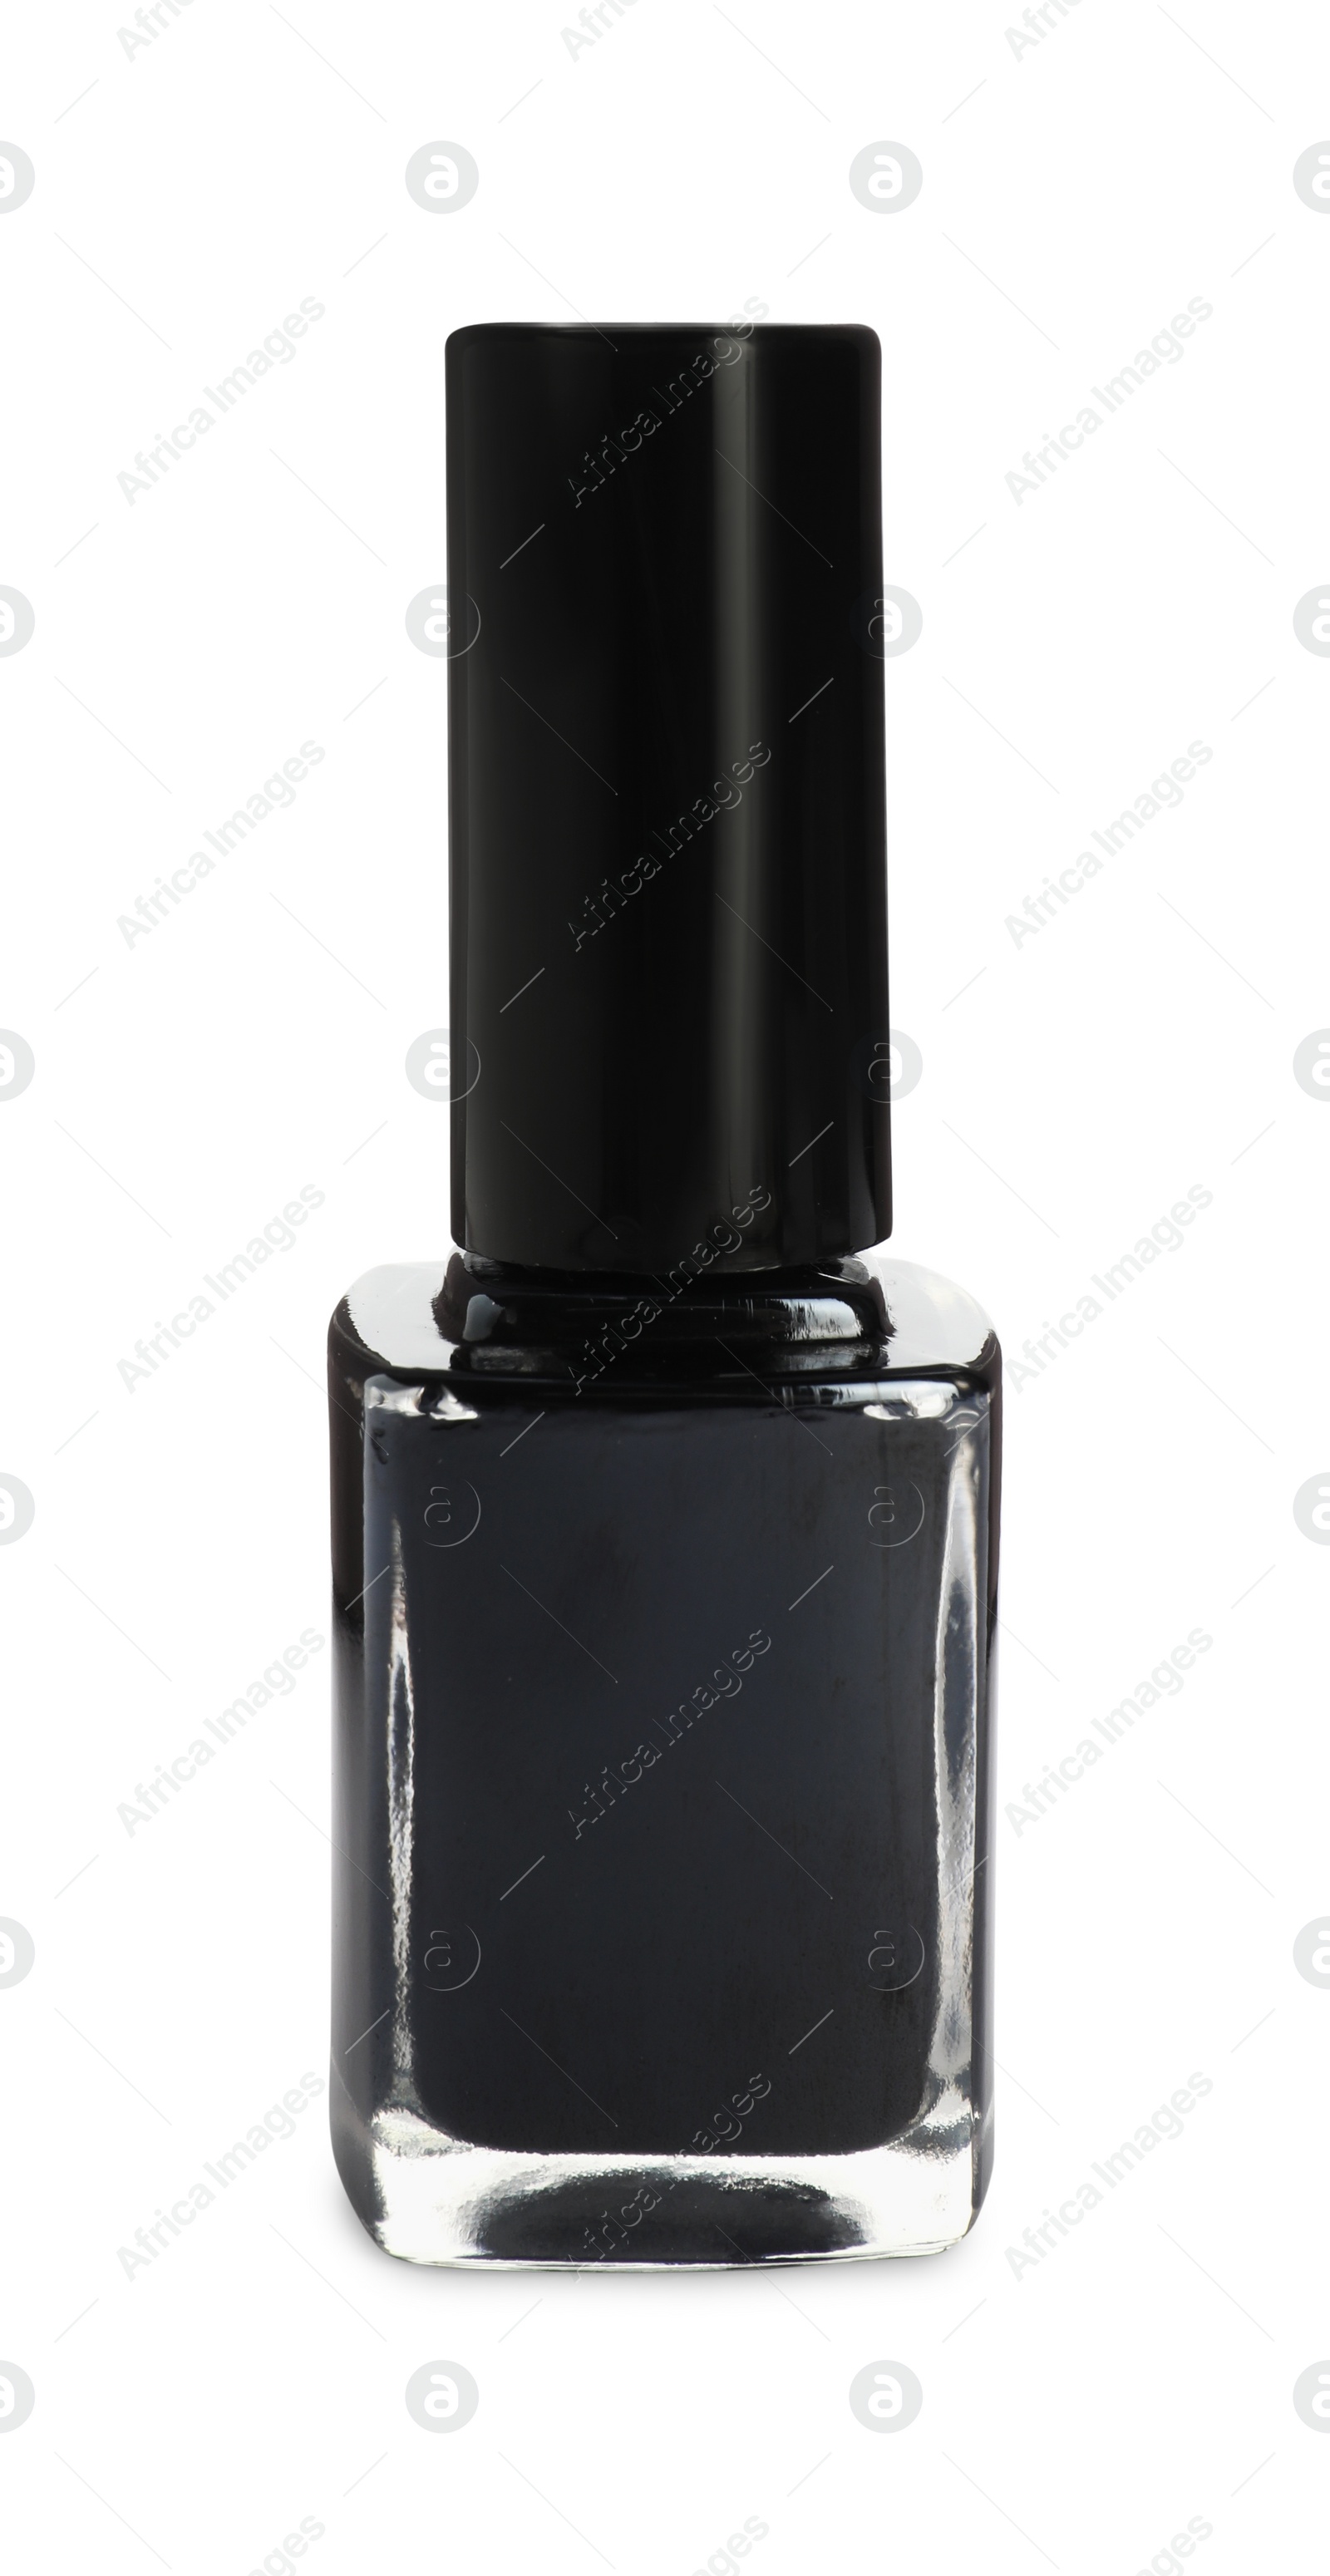 Photo of Black nail polish in bottle isolated on white